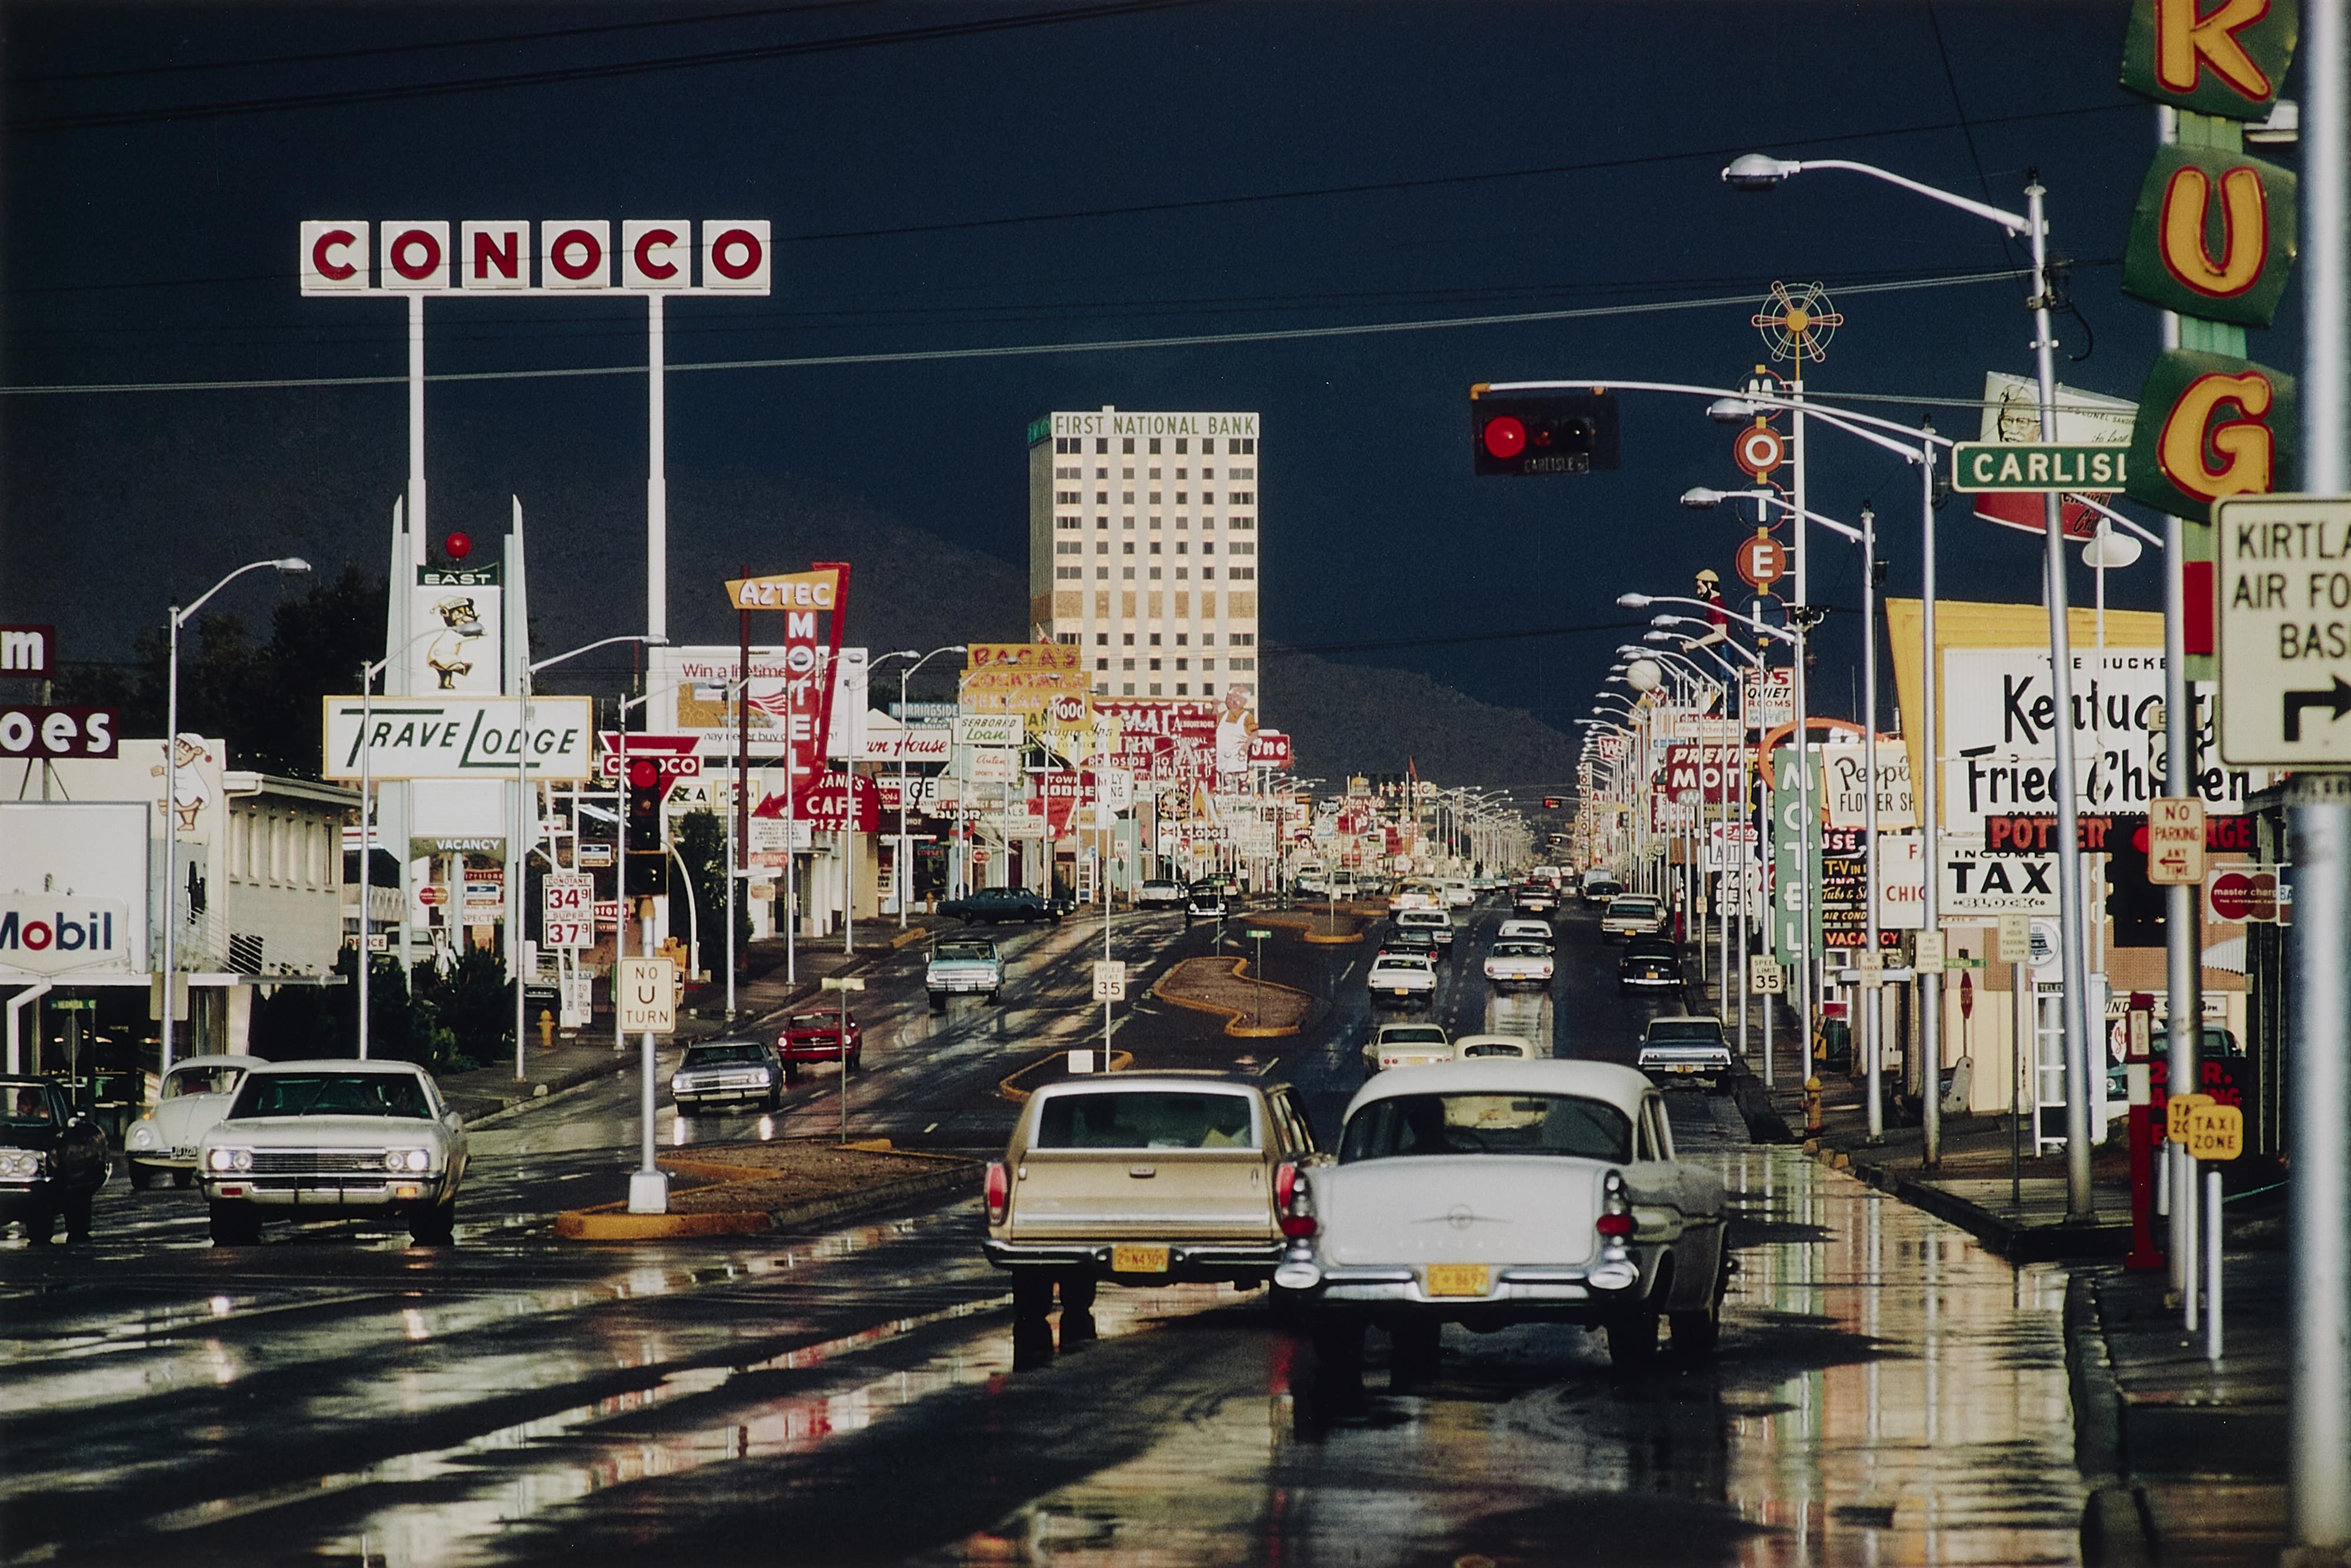 Ernst Haas - Route 66, Albuquerque, New Mexico - image-1